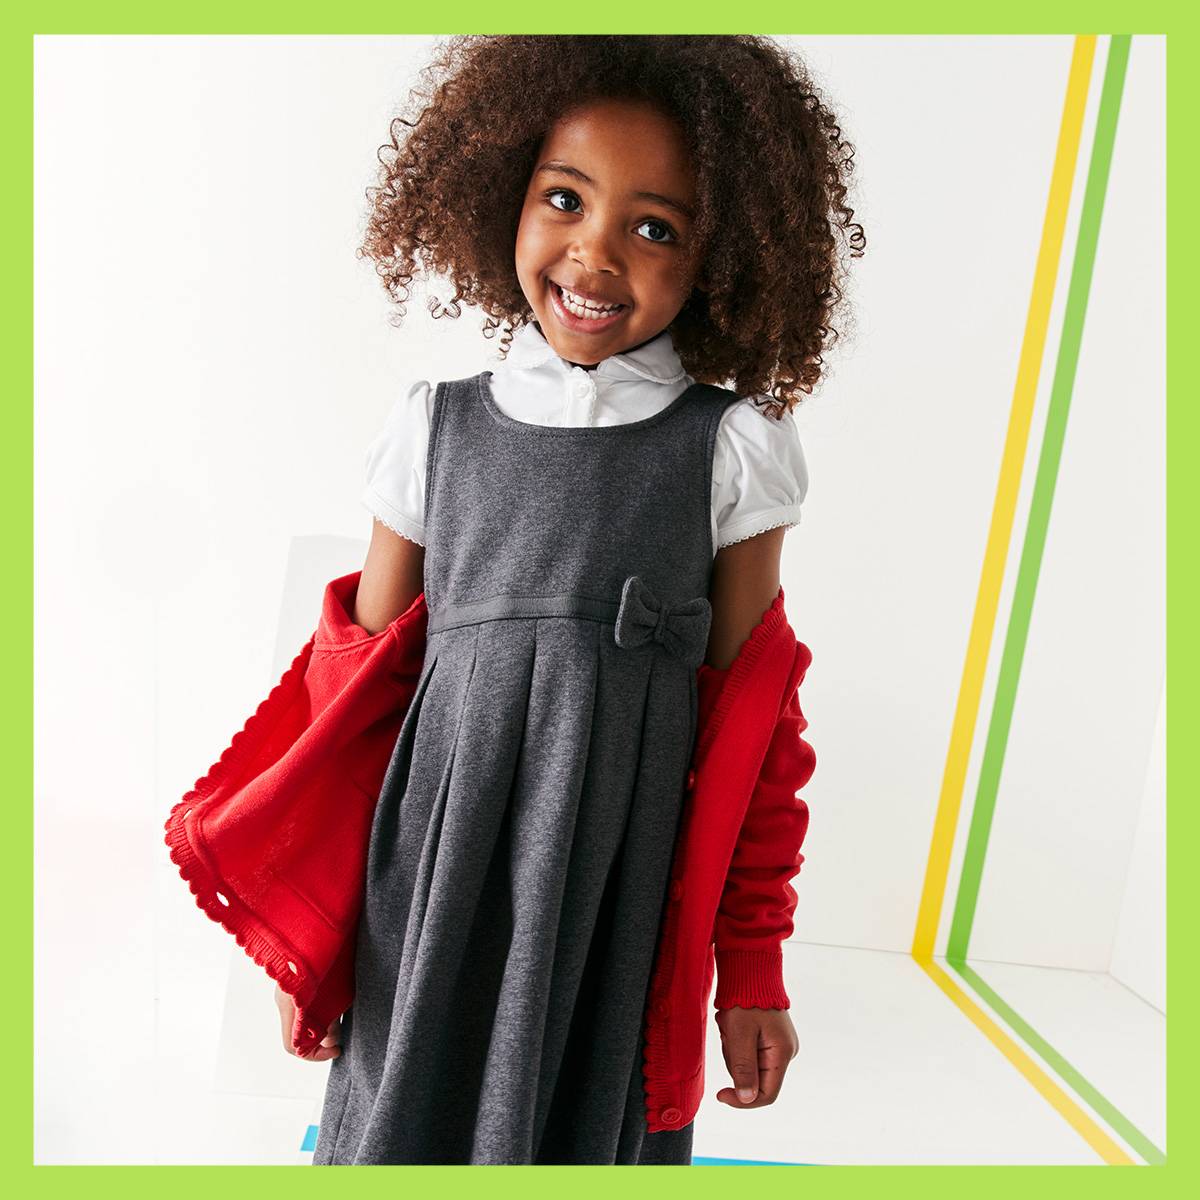 Child wearing grey pinafore and red cardigan. Shop girls’ uniform